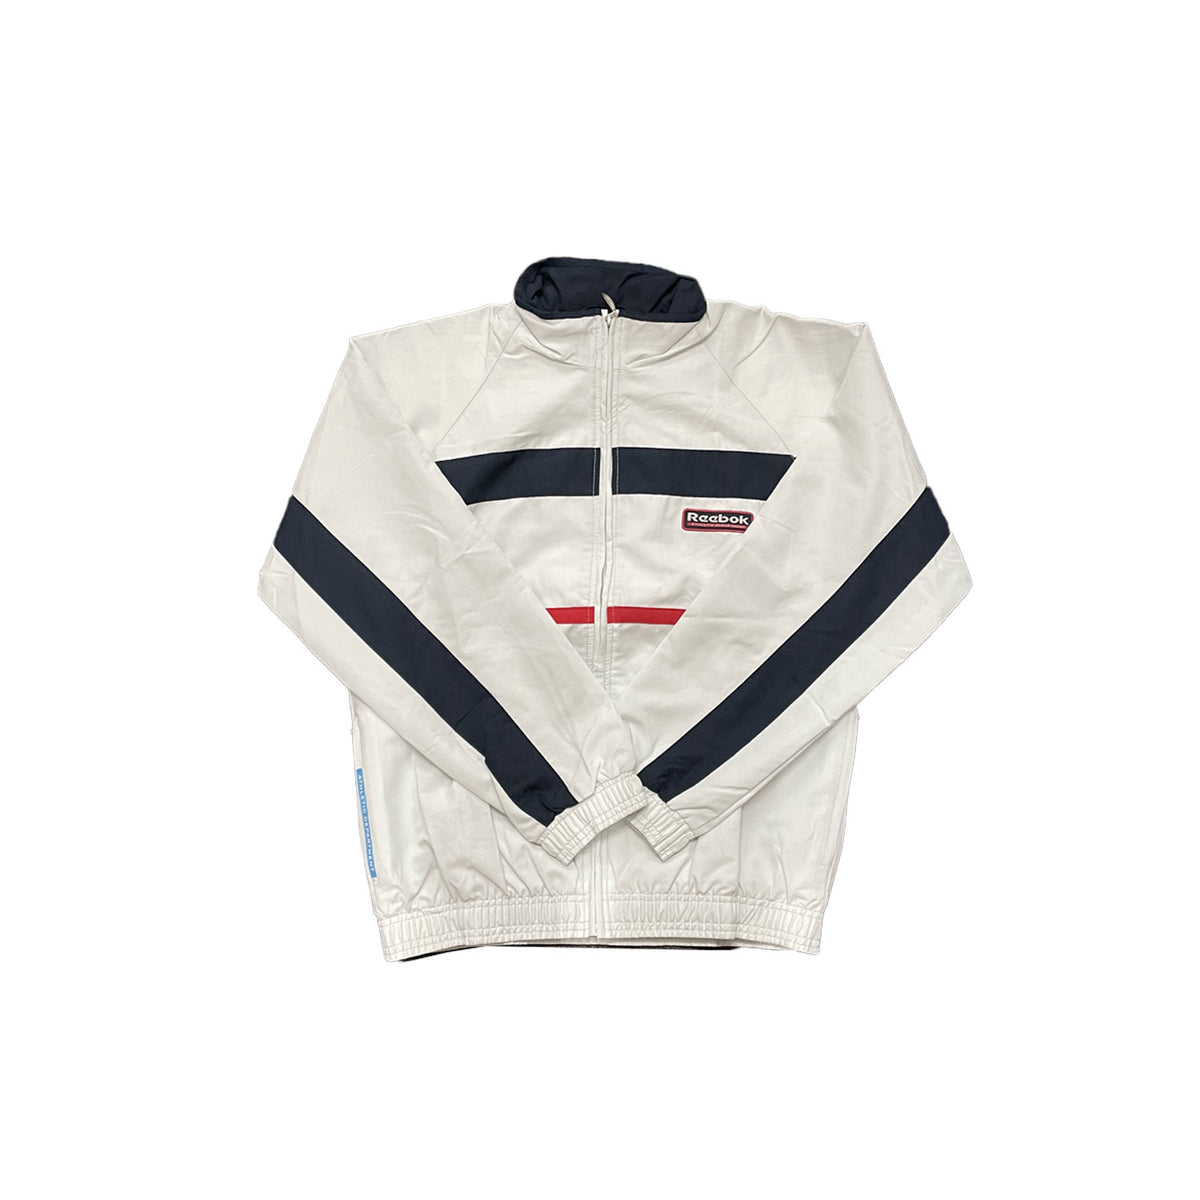 Reebok Original Womens Lined Sport Jacket